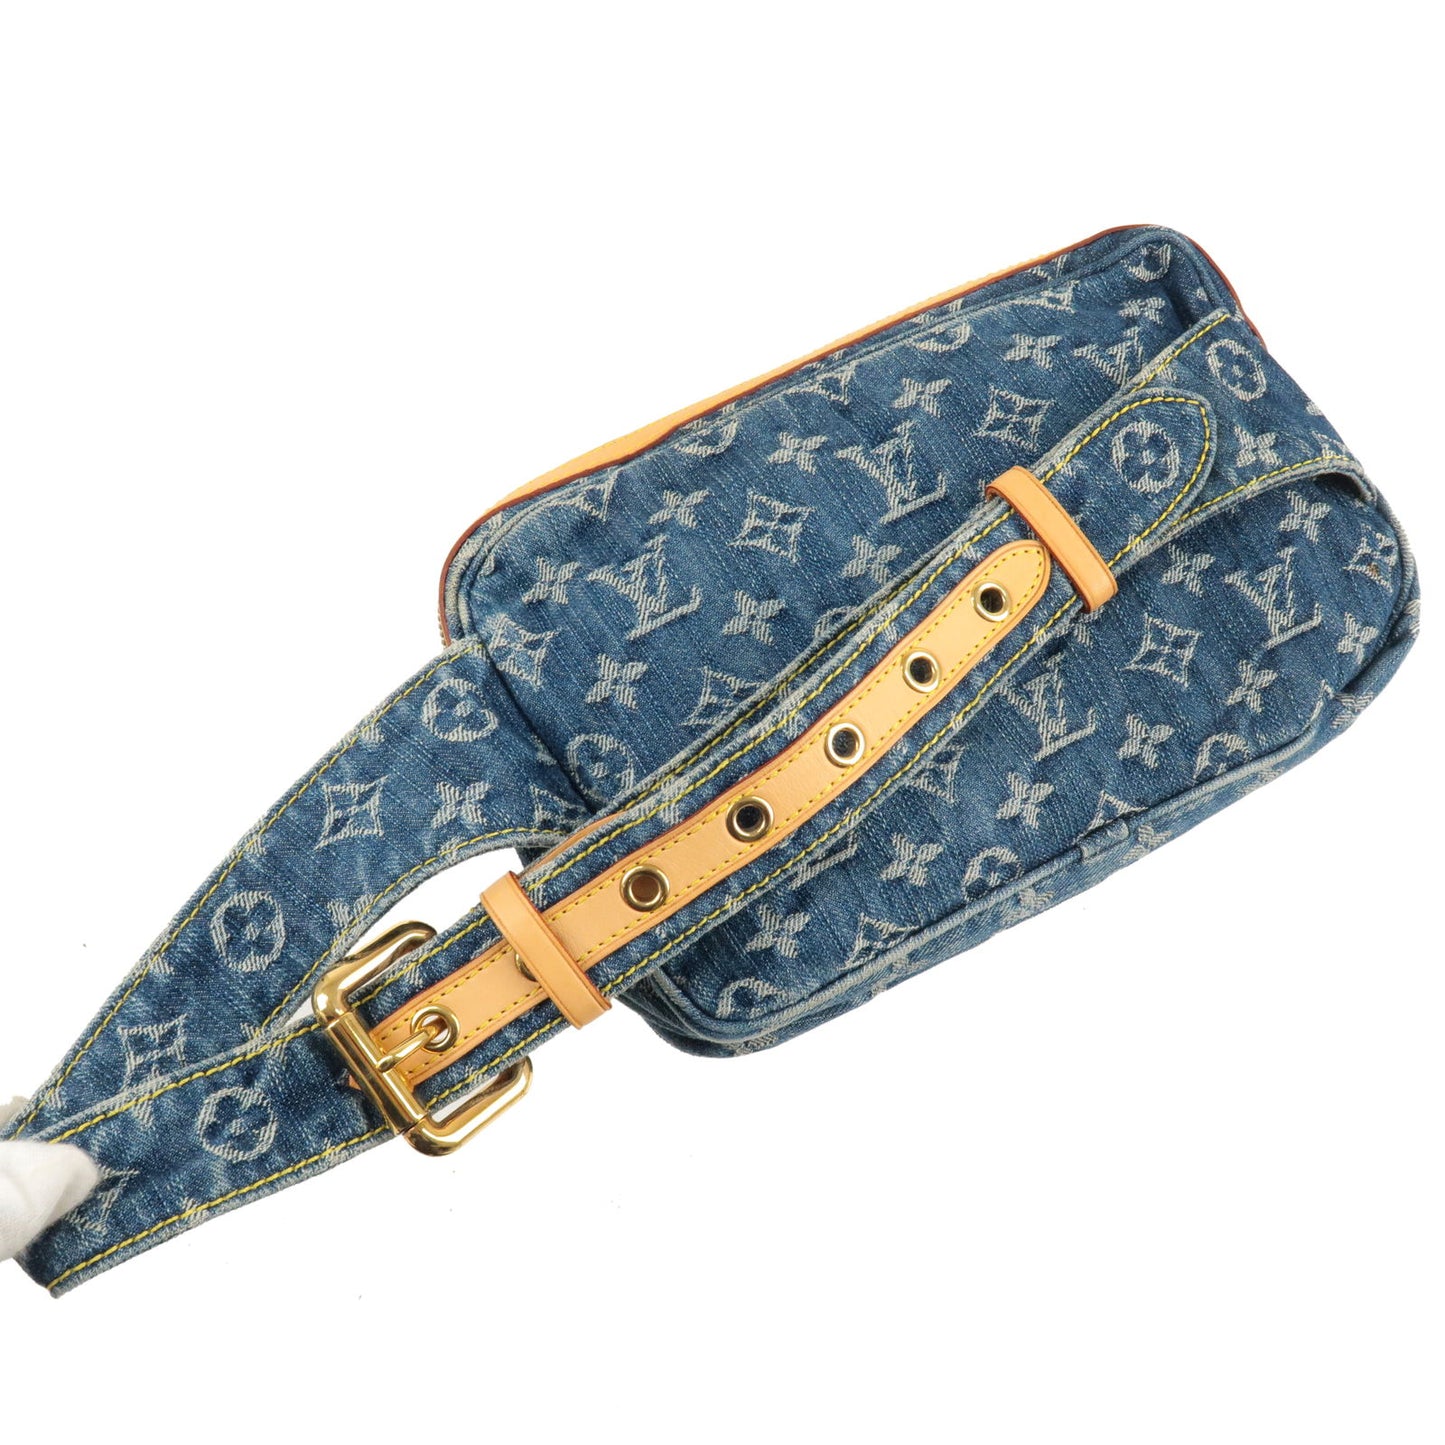 Louis+Vuitton+Bum+Bag+Belt+Bag+%26+Fanny+Pack+Small+Blue+Denim for